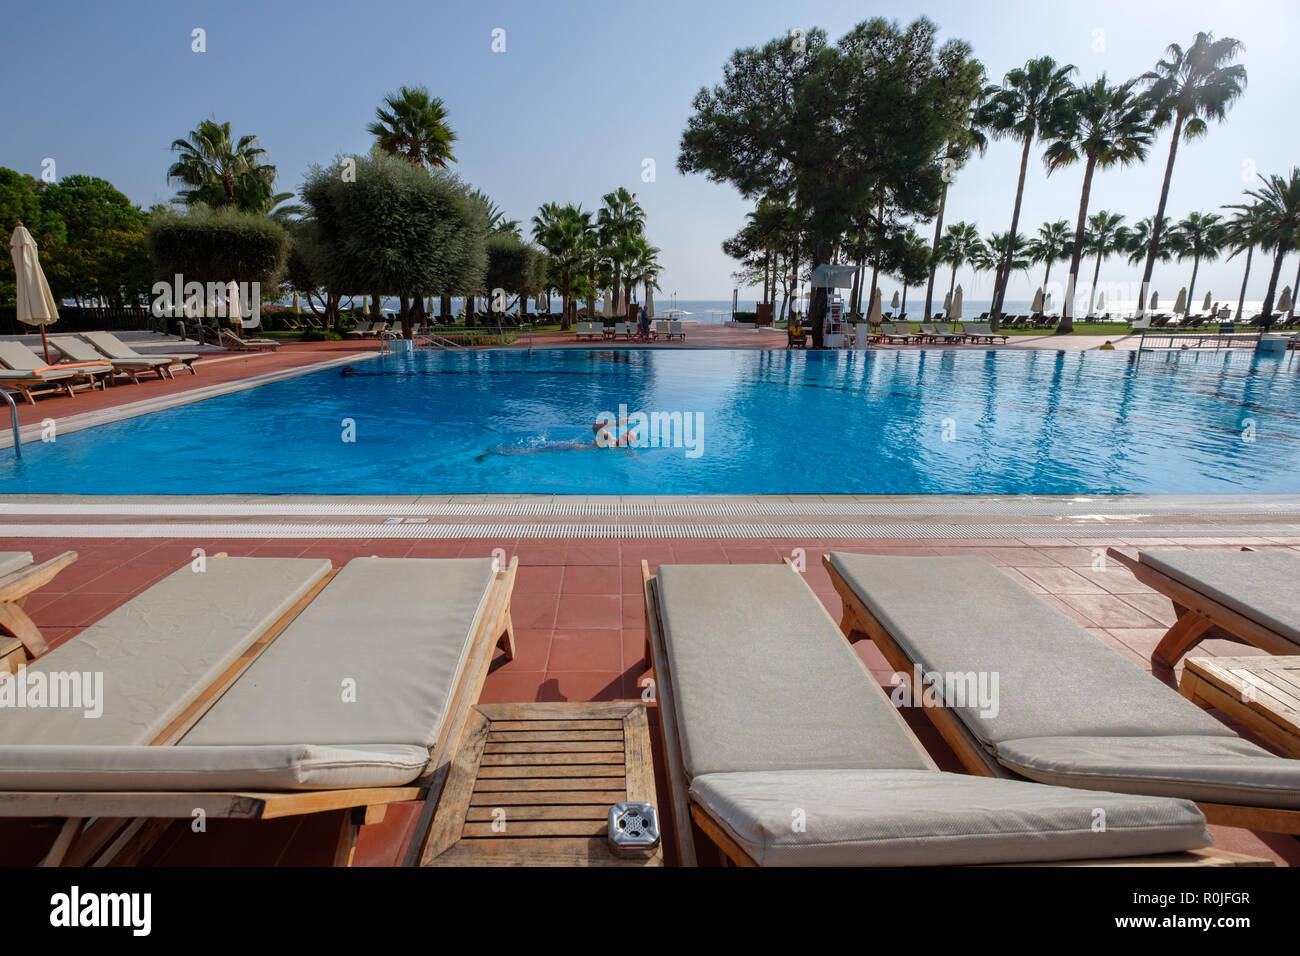 Man swimming on outdoor swimming pool at the Club Med Palmiye luxury all inclusive resort, Kemer, Antalya, Turkey Stock Photo